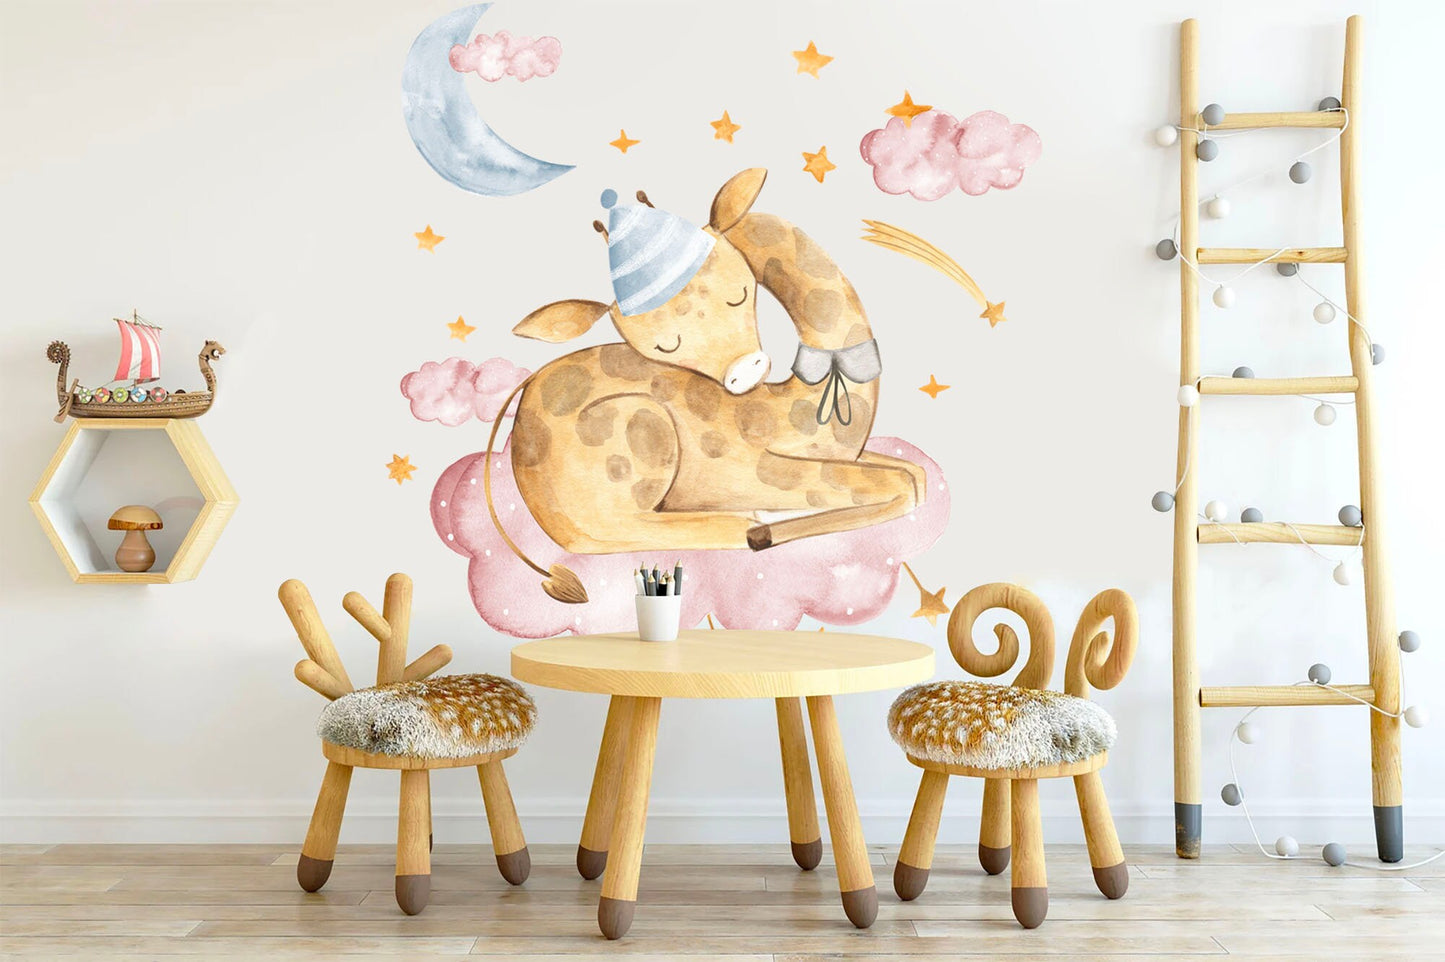 Sleeping Giraffe on Pink Cloud Wall Decals - Moon, Stars, Watercolor Style - Girls' Room Decor - BR064